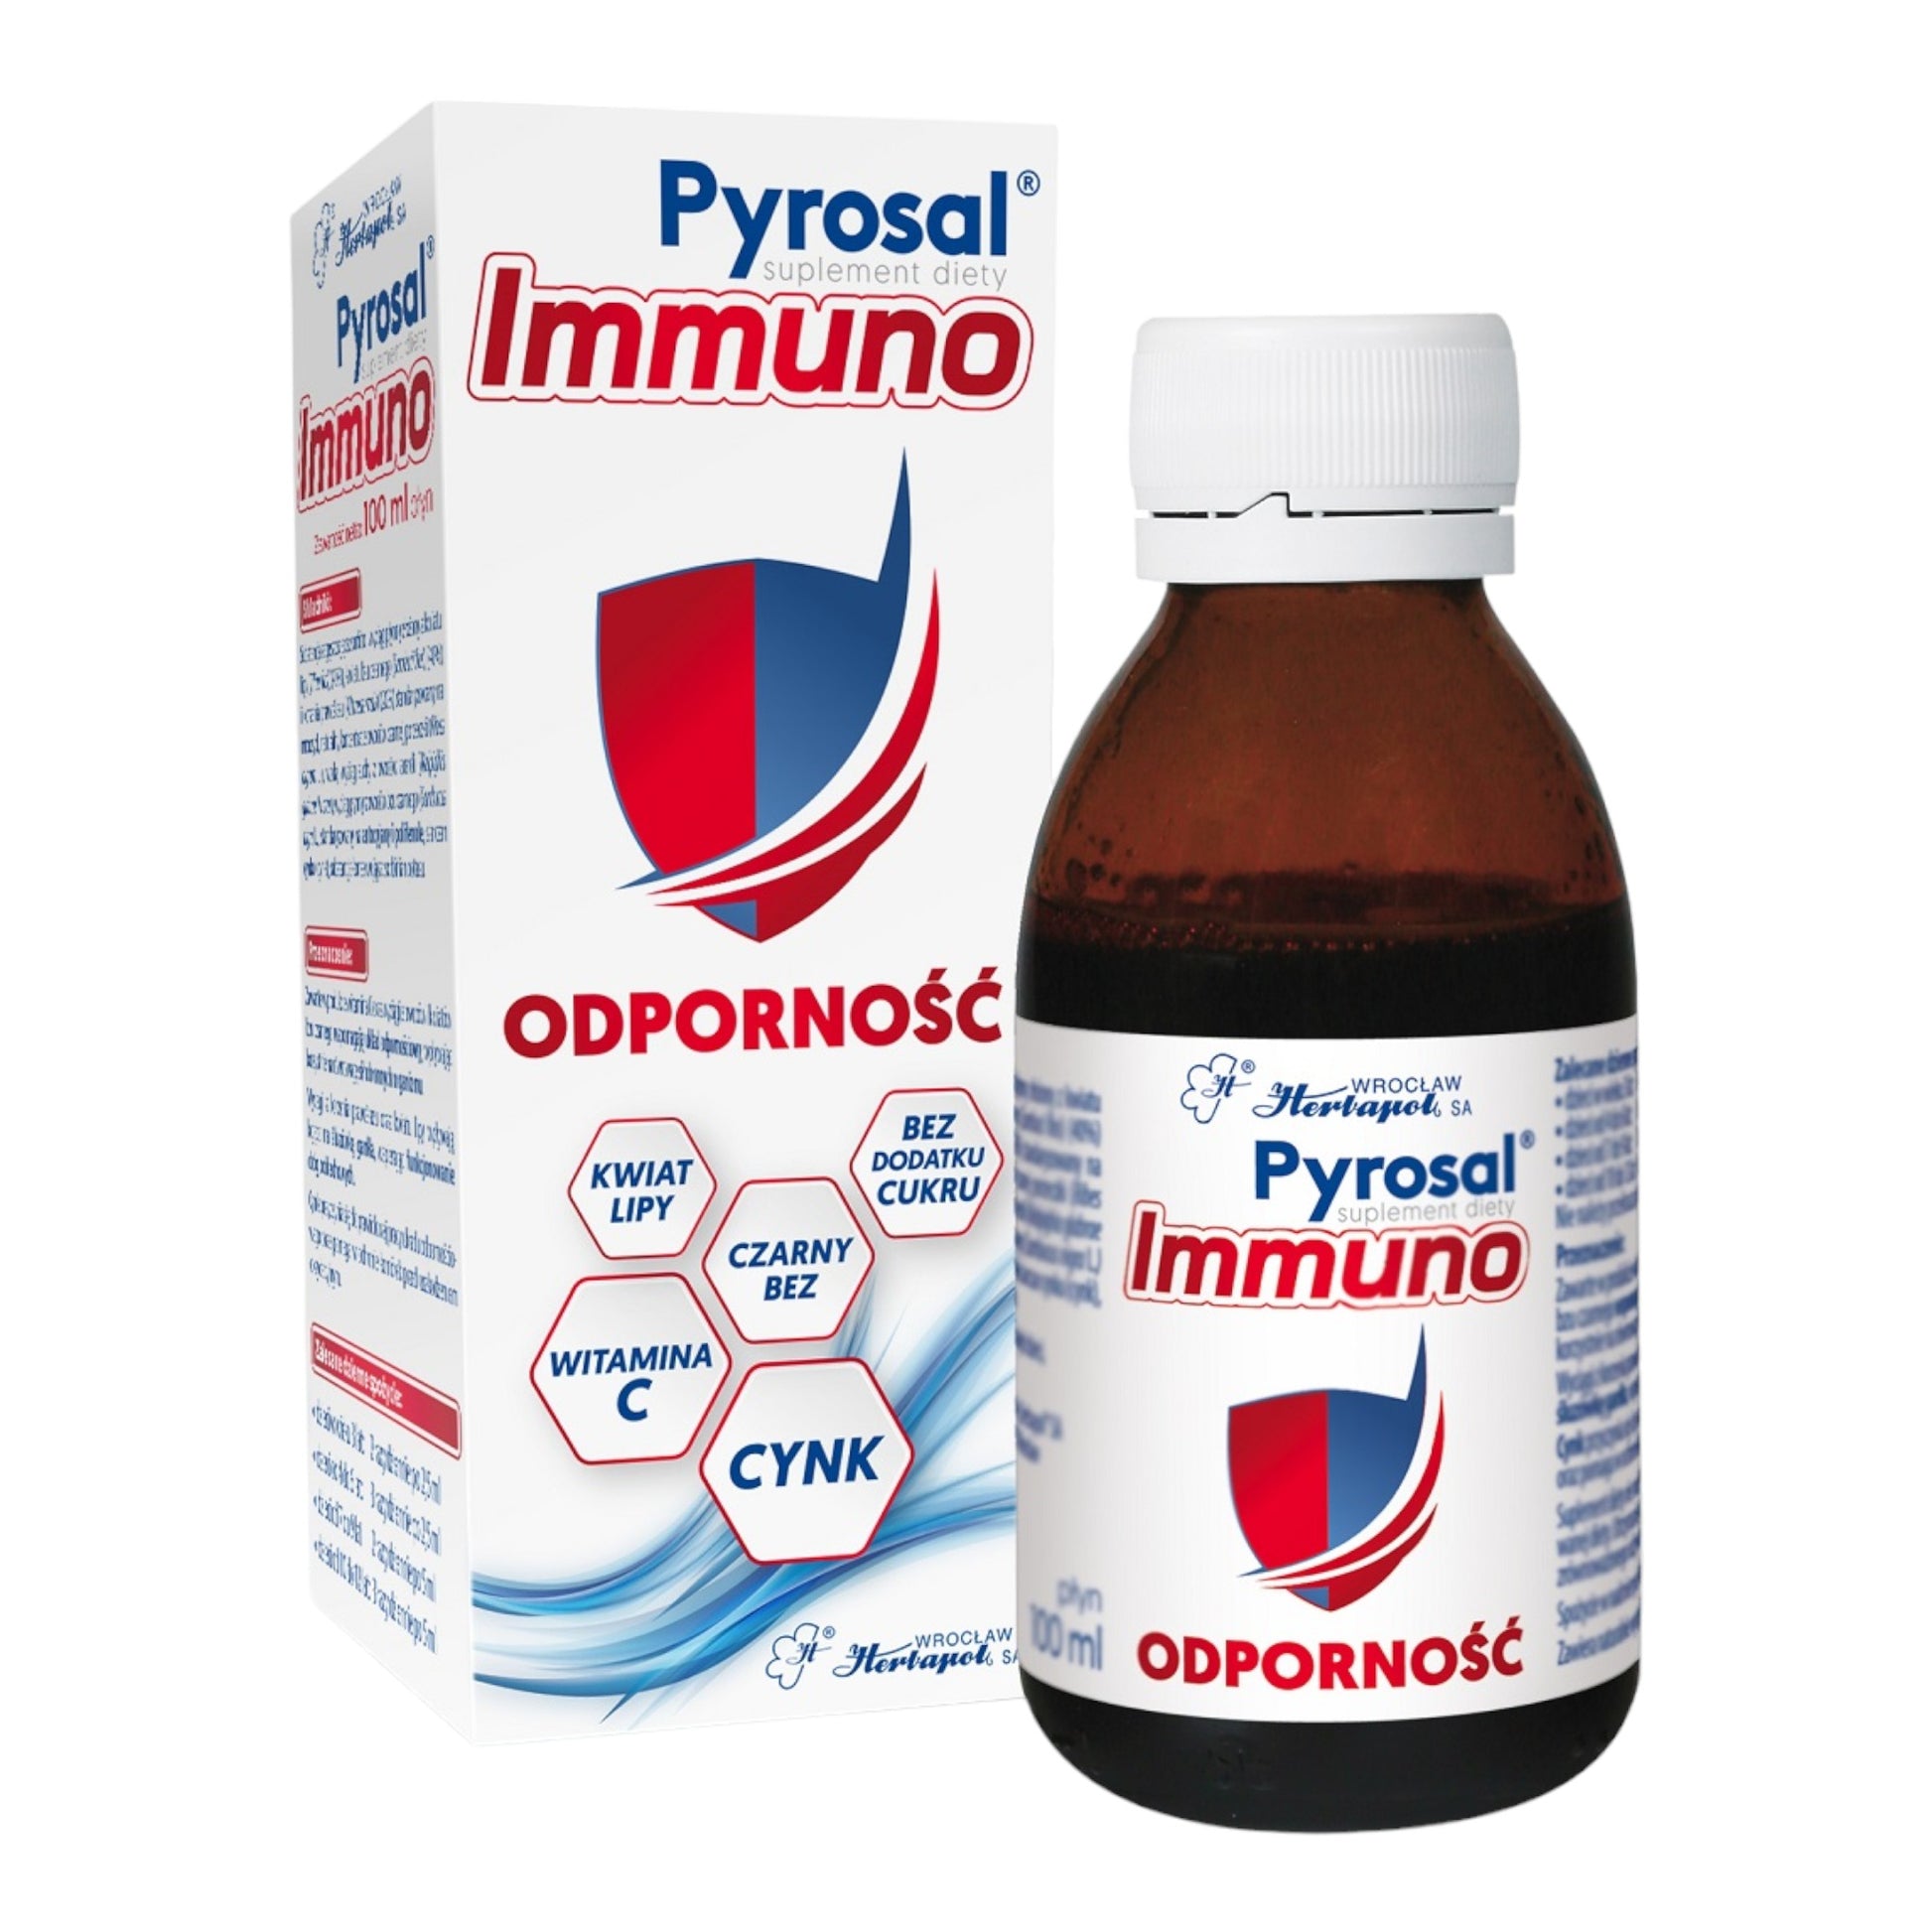 pyrosal immuno syrup